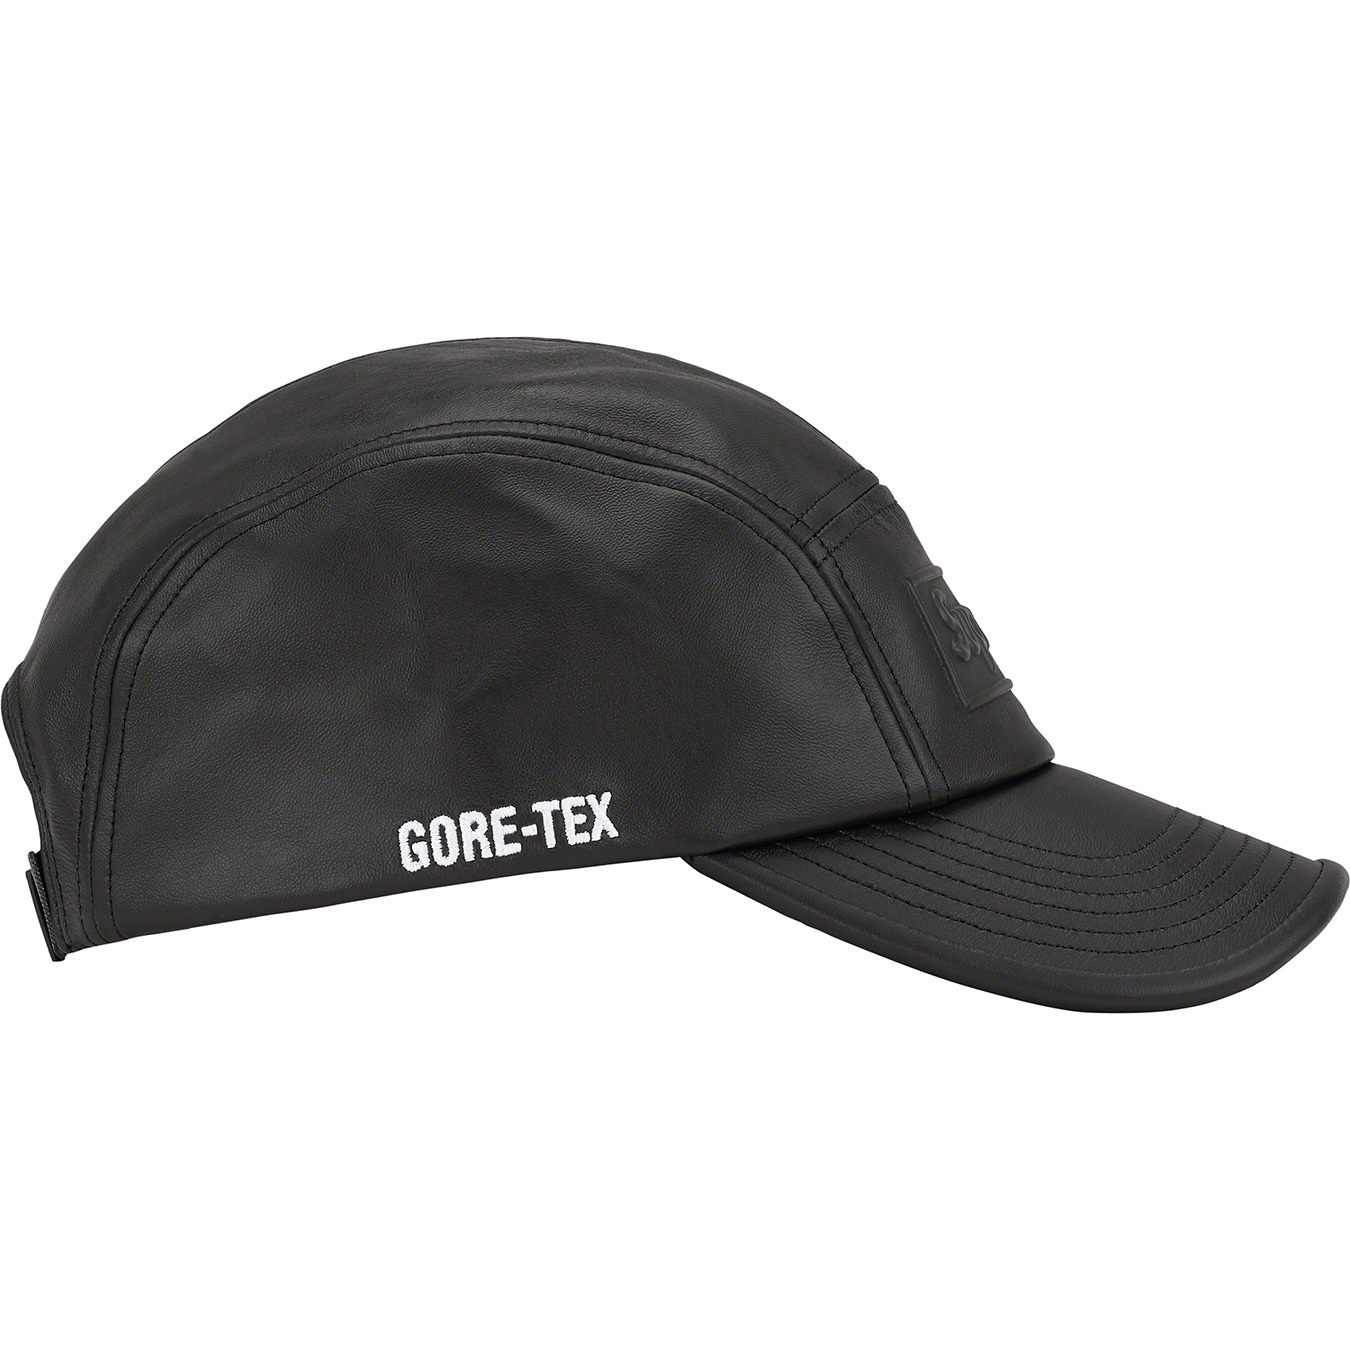 Supreme GORE-TEX Leather Camp Cap